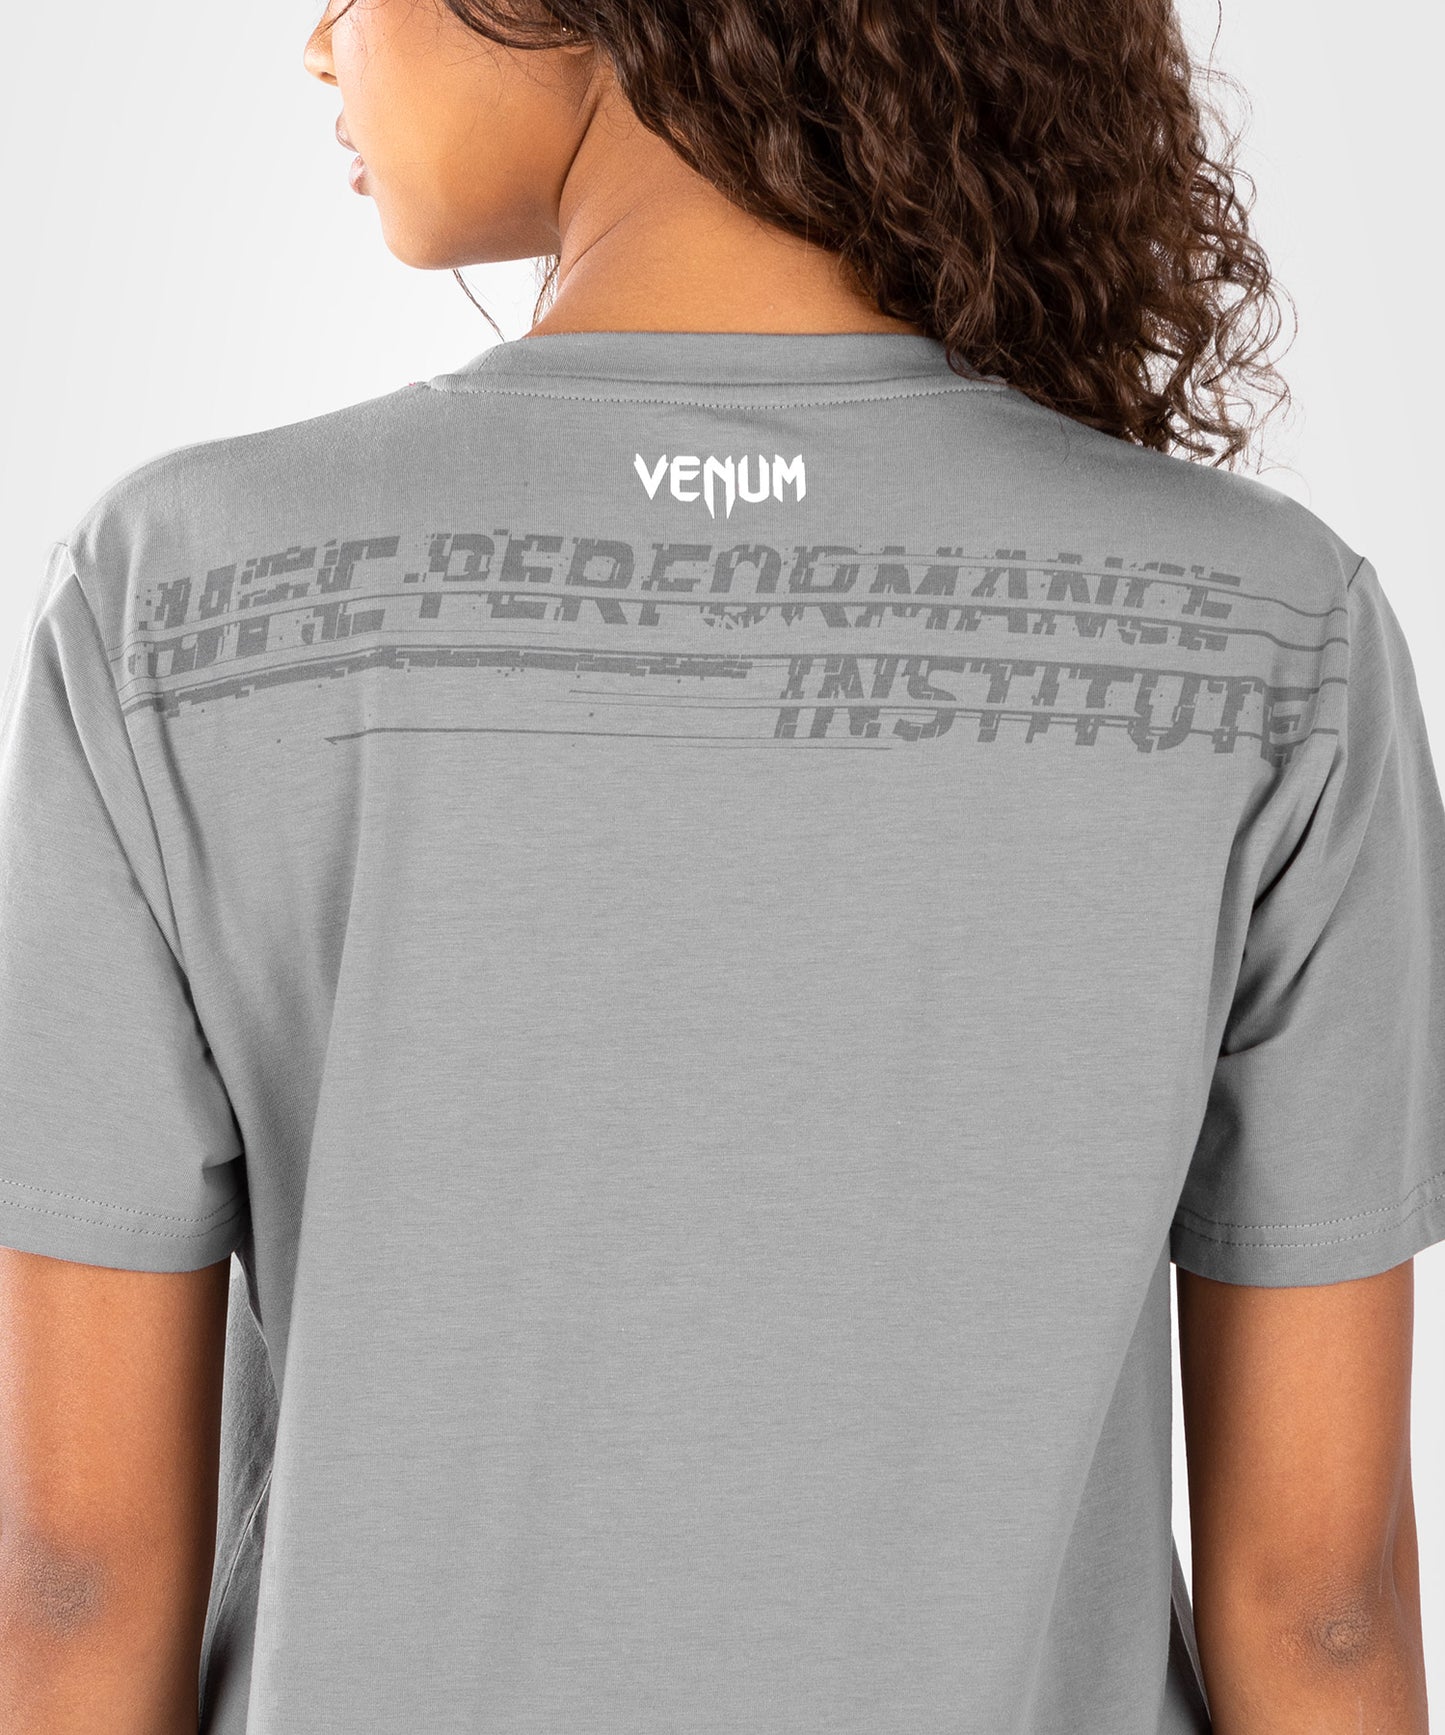 UFC Venum Performance Institute 2.0  T-Shirt Femme - Gris